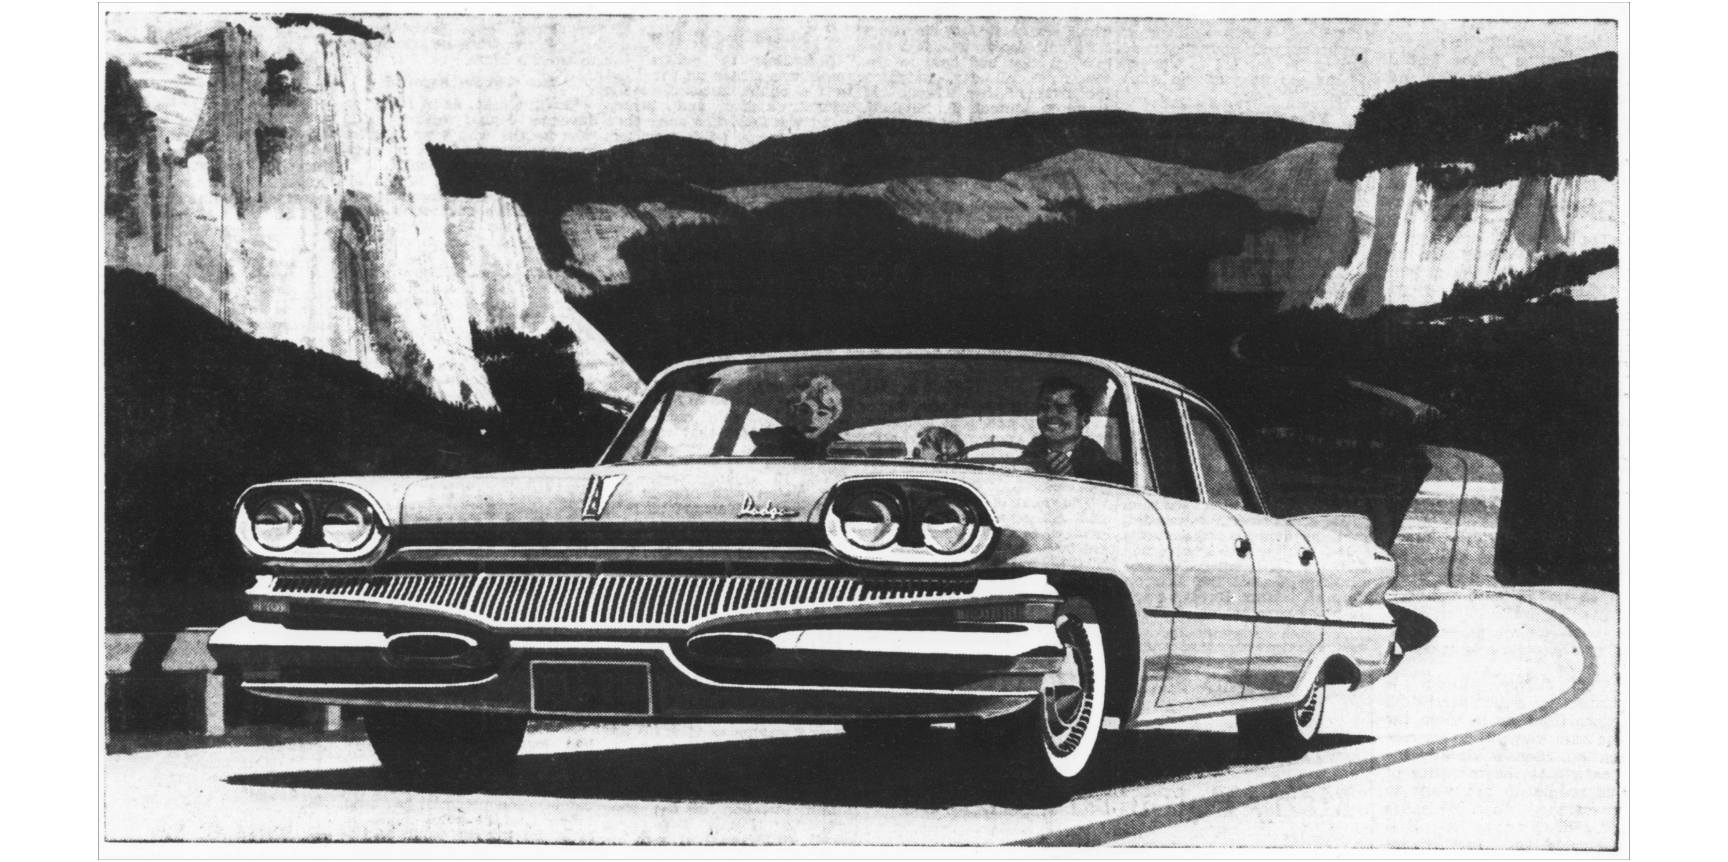 Enlarged view: Economy car (Source: Evening Star 1960 / chroniclingamerica.loc.gov )